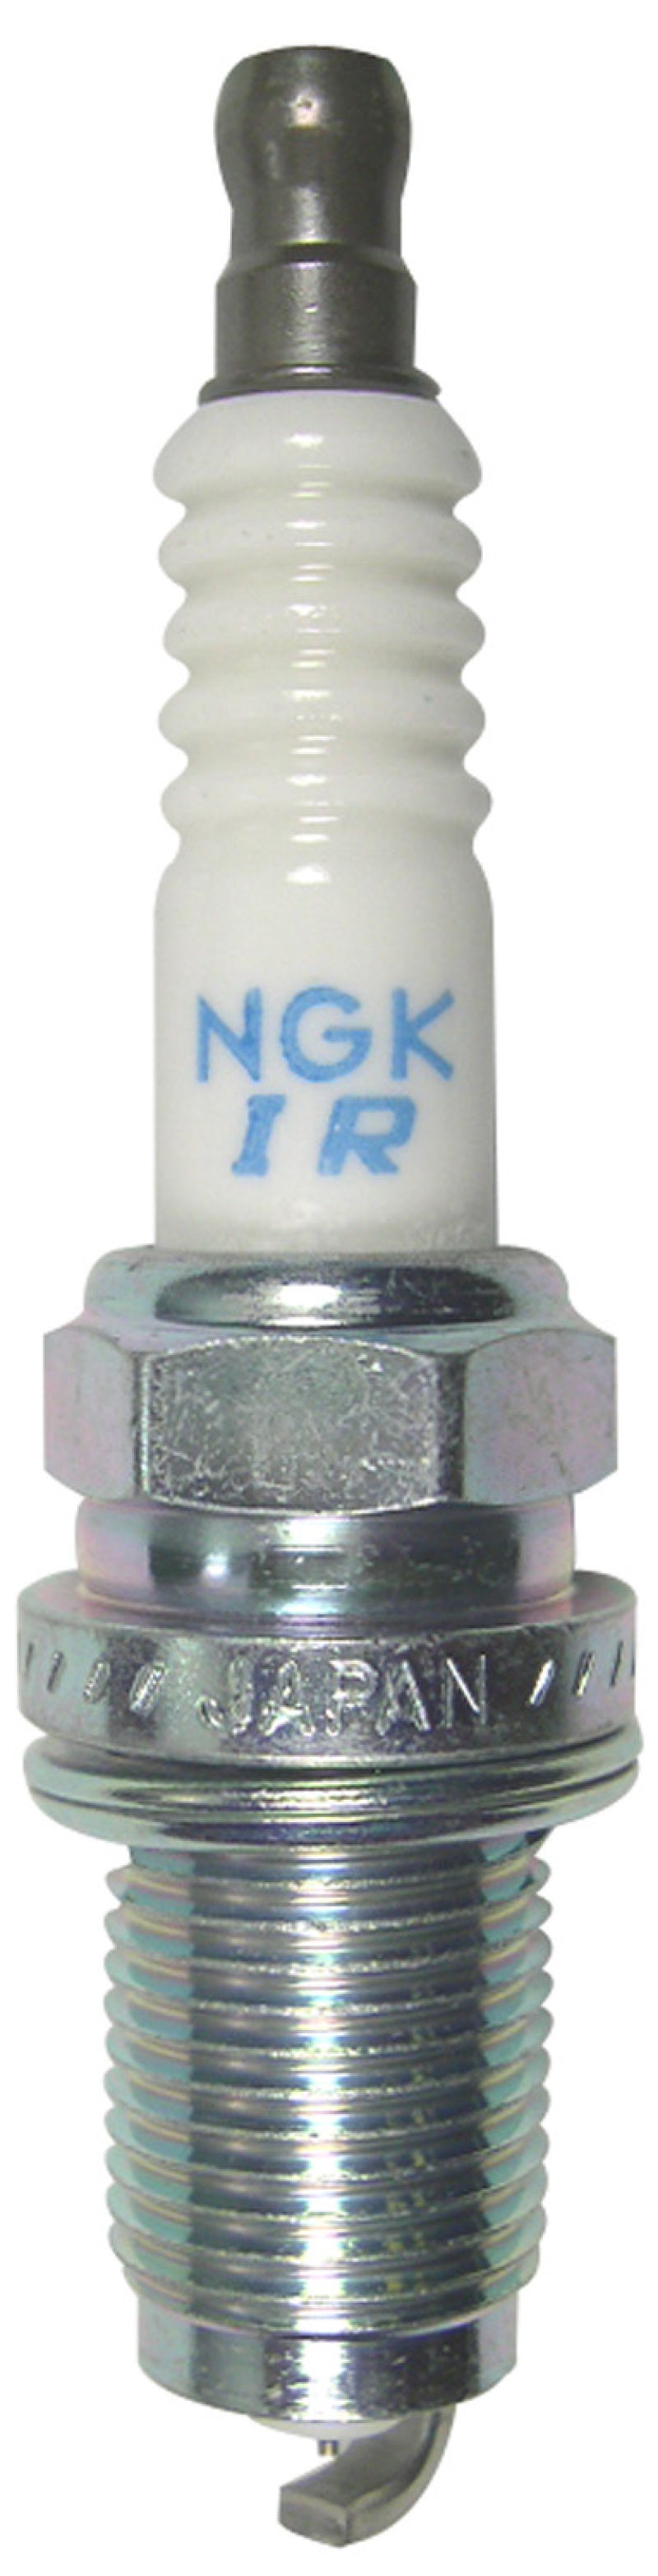 NGK Laser Iridium Spark Plug Box of 4 (IZFR6K-11E)